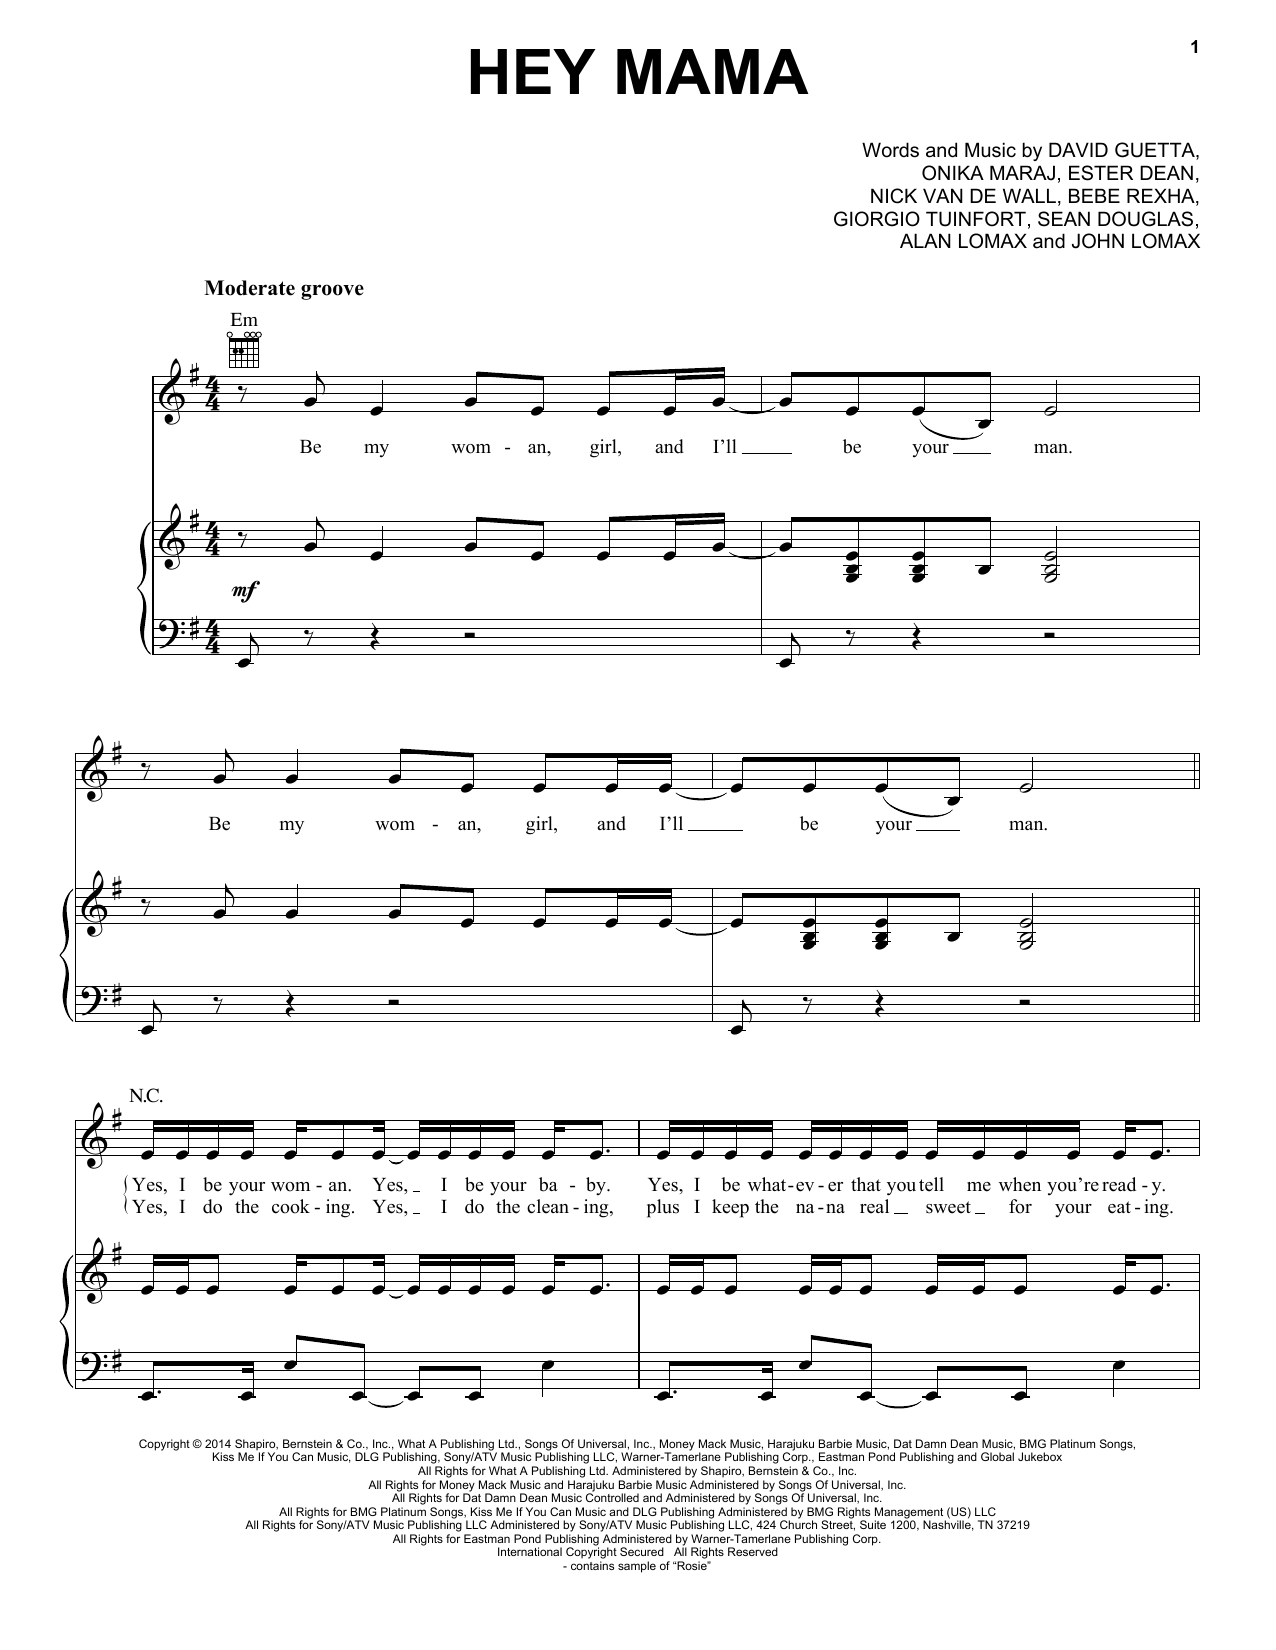 David Guetta feat. Nicki Minaj & Afrojack Hey Mama Sheet Music Notes & Chords for Piano, Vocal & Guitar (Right-Hand Melody) - Download or Print PDF